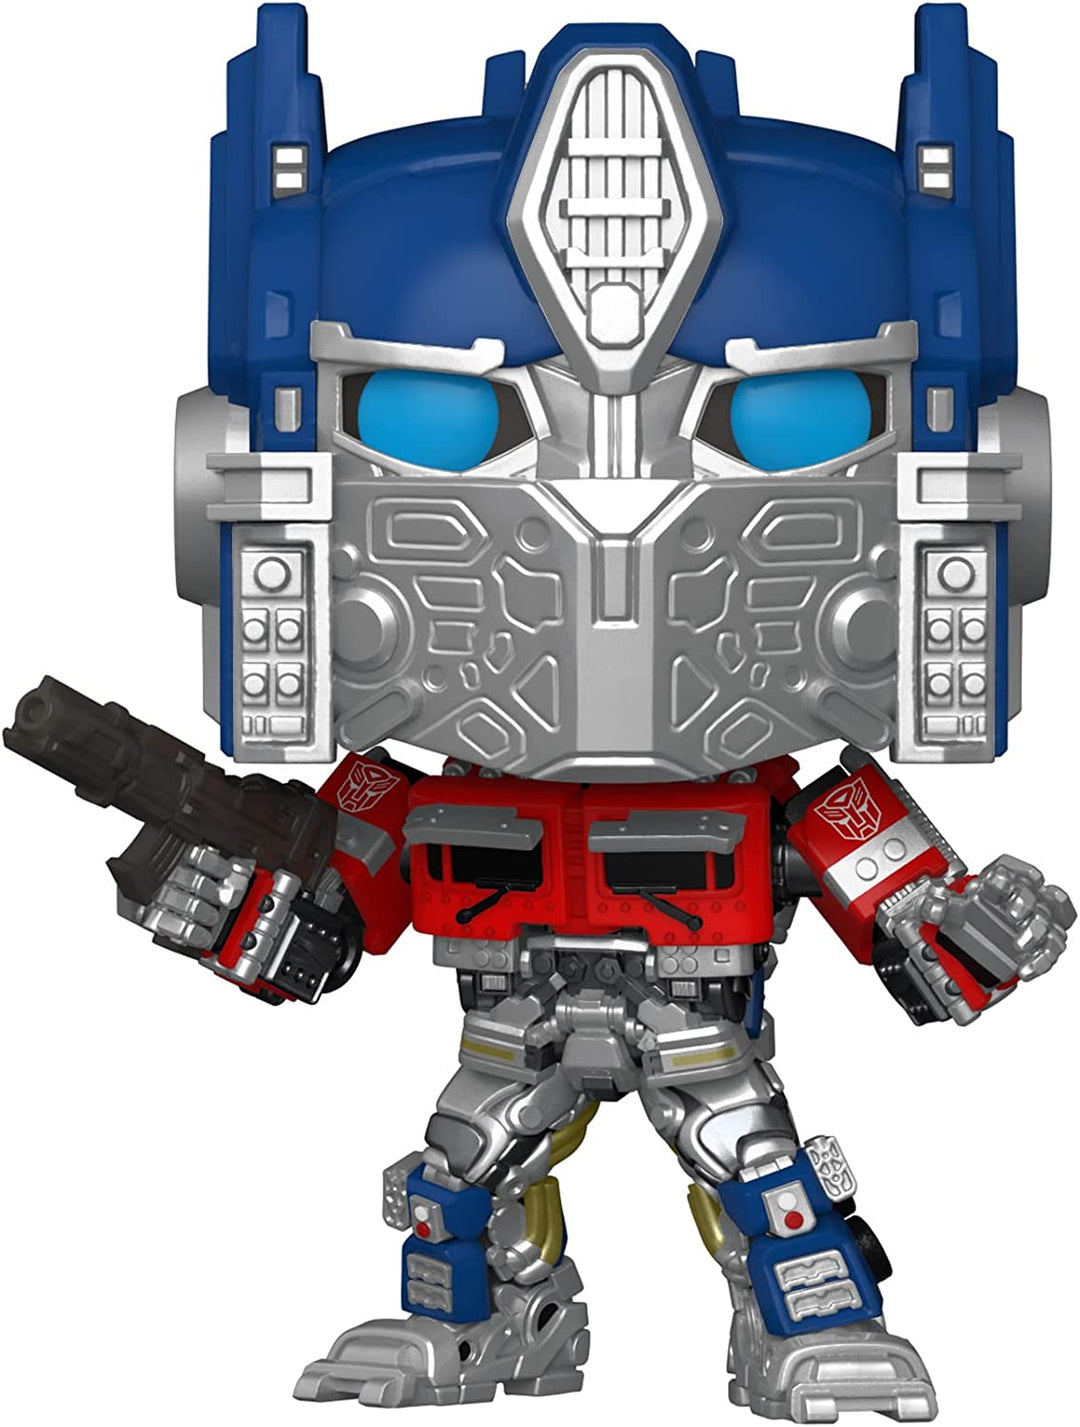 Funko POP! Movies: Transformers: Rise Of The Beasts - Optimus Prime Pop! Vinyl